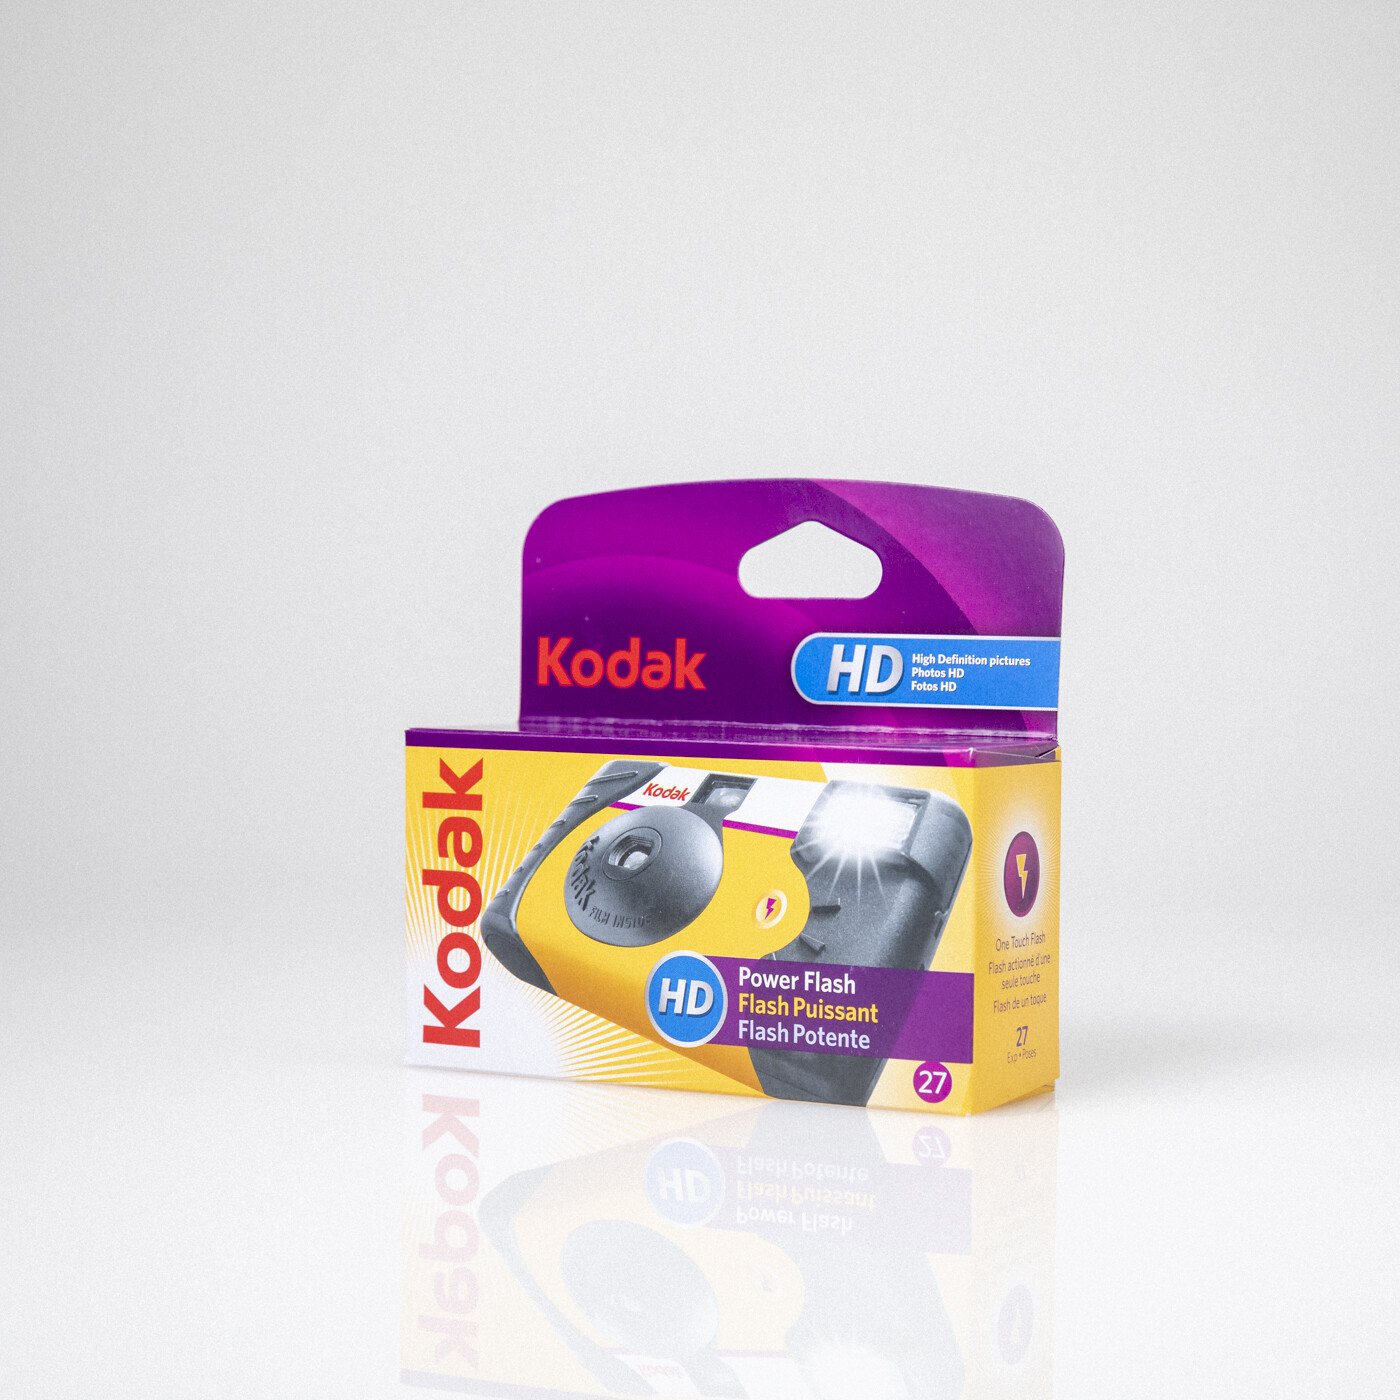 Kodak Power Flash Single-Use Camera 800 ISO [27 EXP]